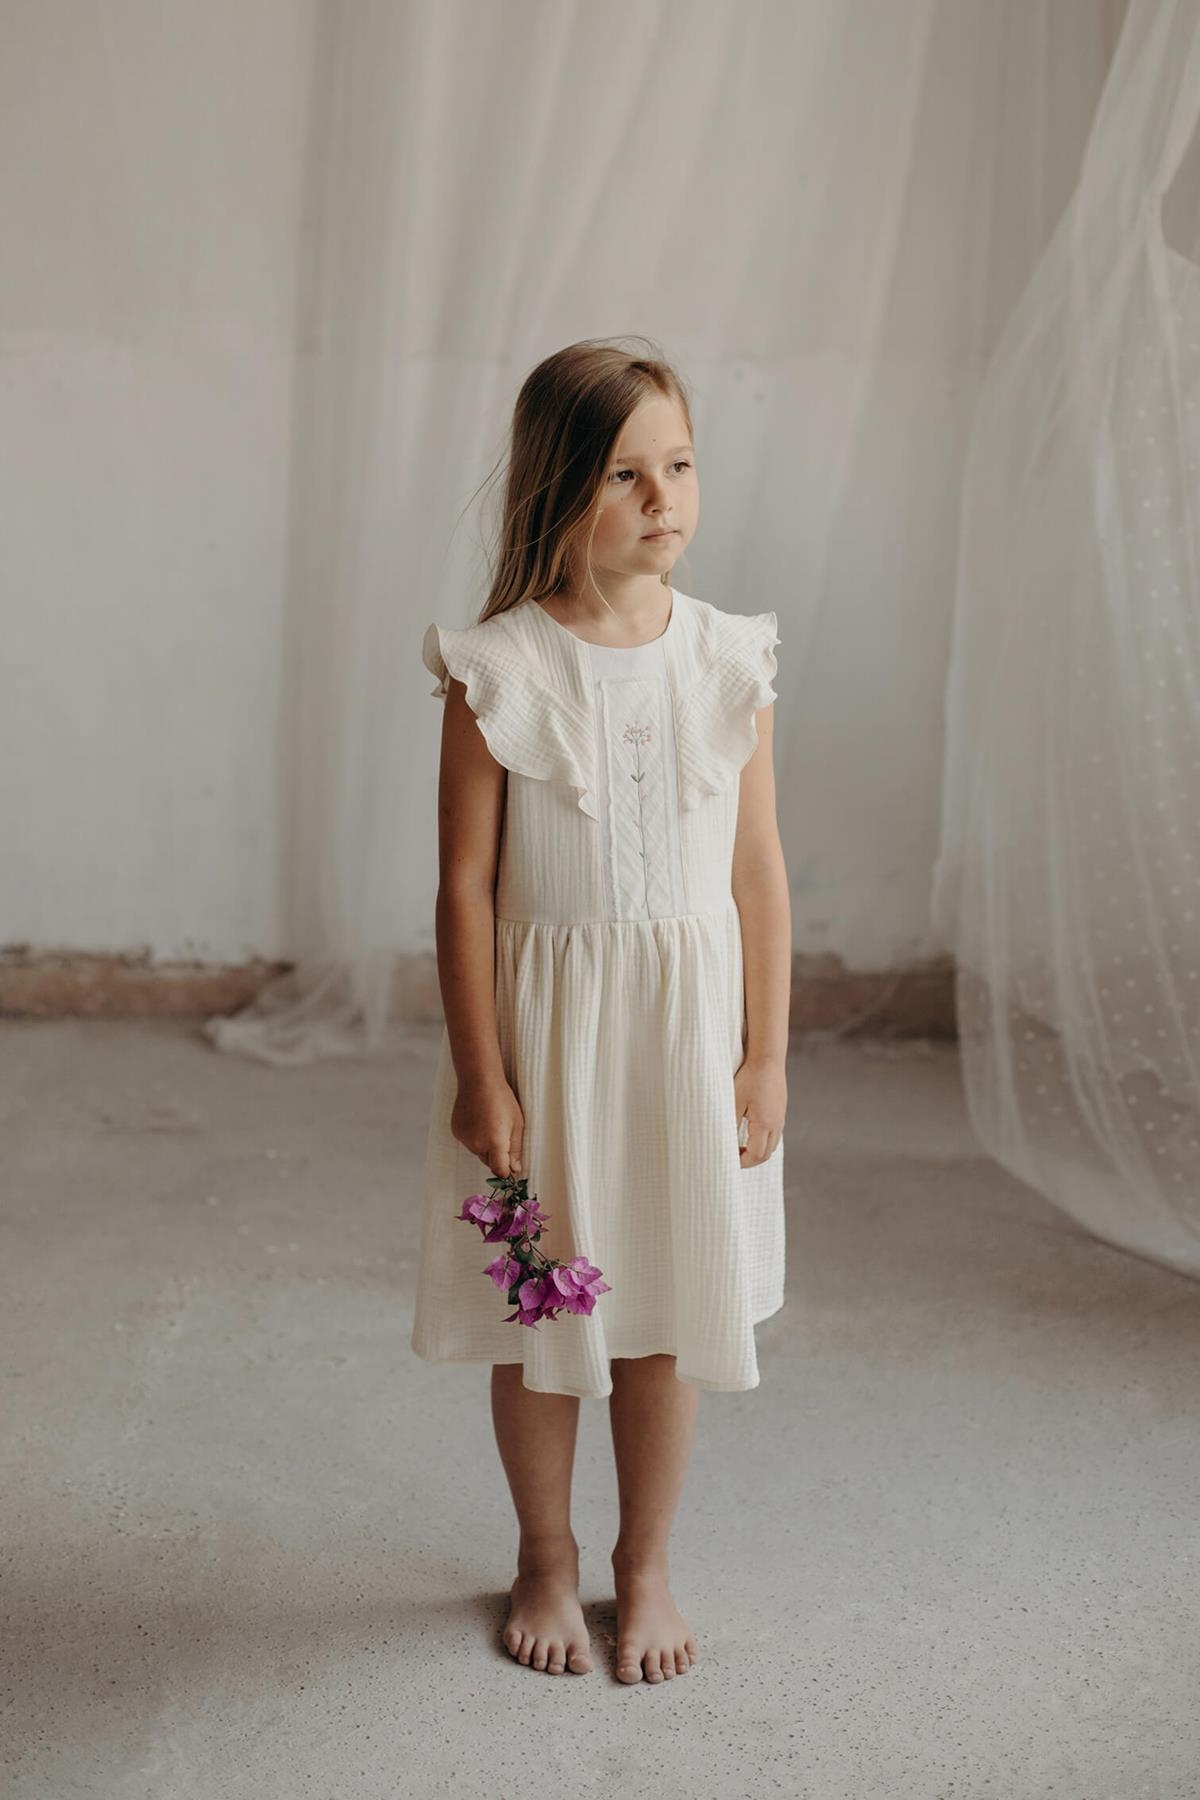 Mod.31.3 Off-white organic dress with yoke and frill | SS23 Mod.31.3 Off-white organic dress with yoke and frill